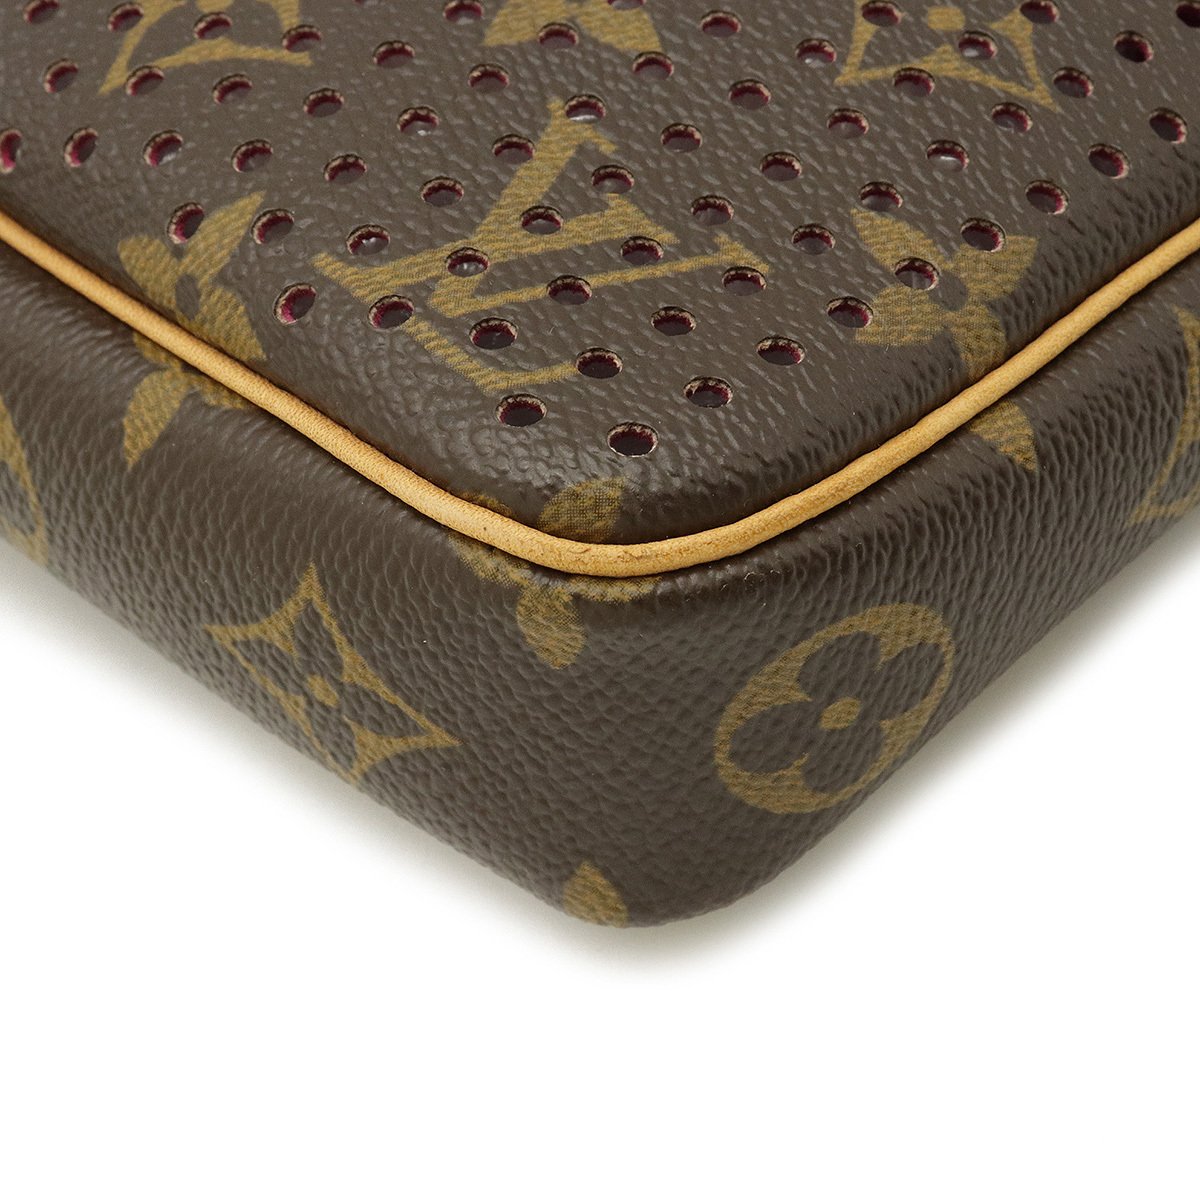 LOUIS VUITTON Monogram Perforated Pochette Accessories Bag Fuchsia